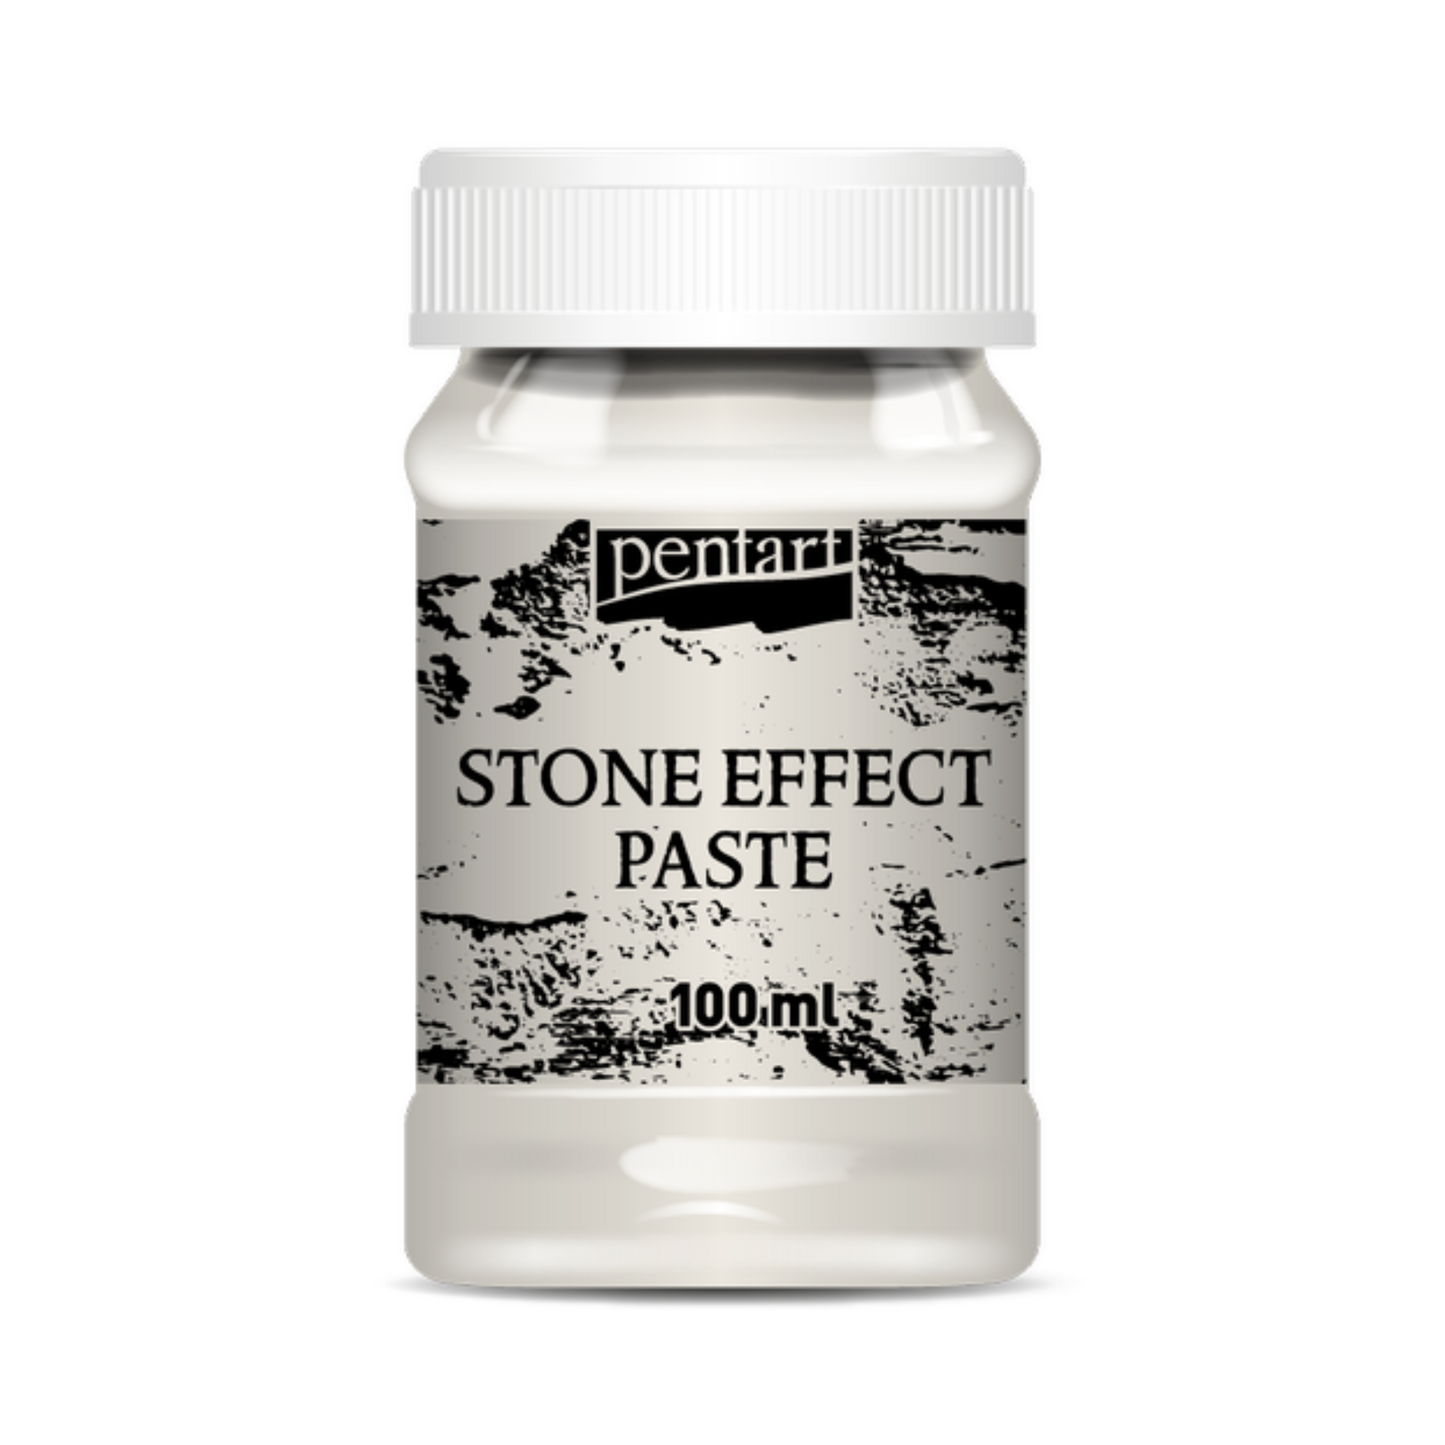 Stone Effect Paste